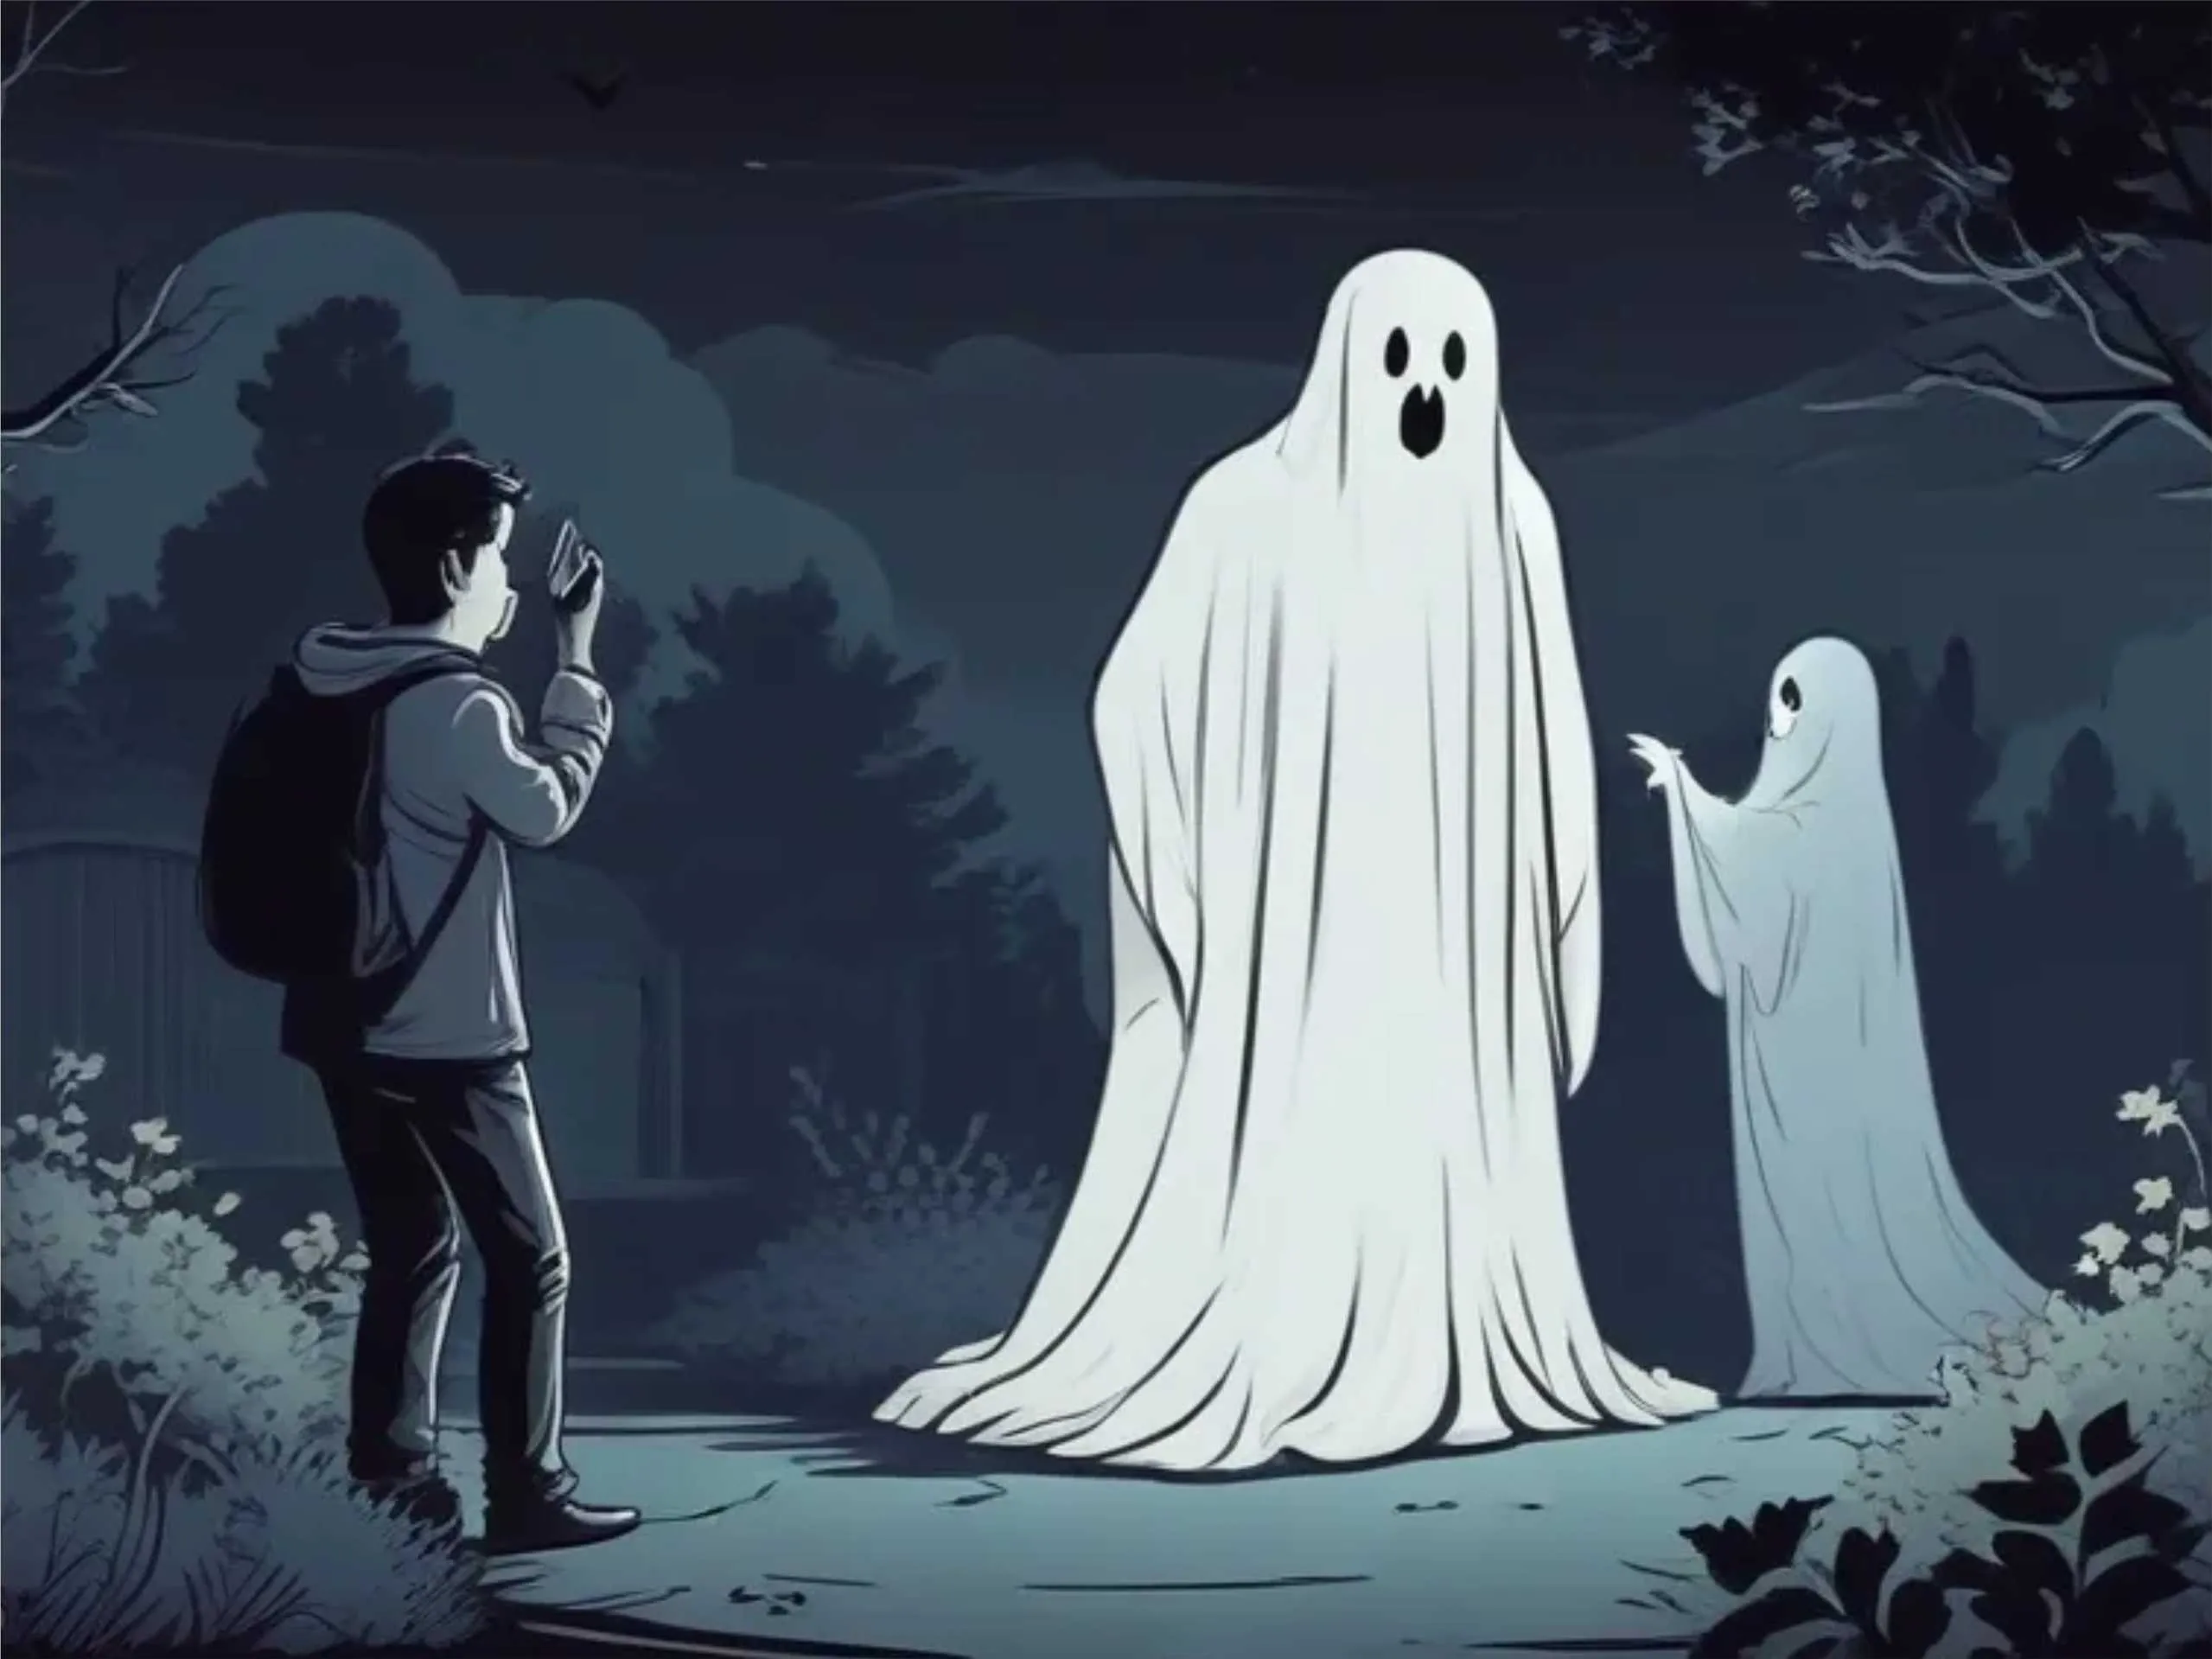 Ghost and man cartoon image